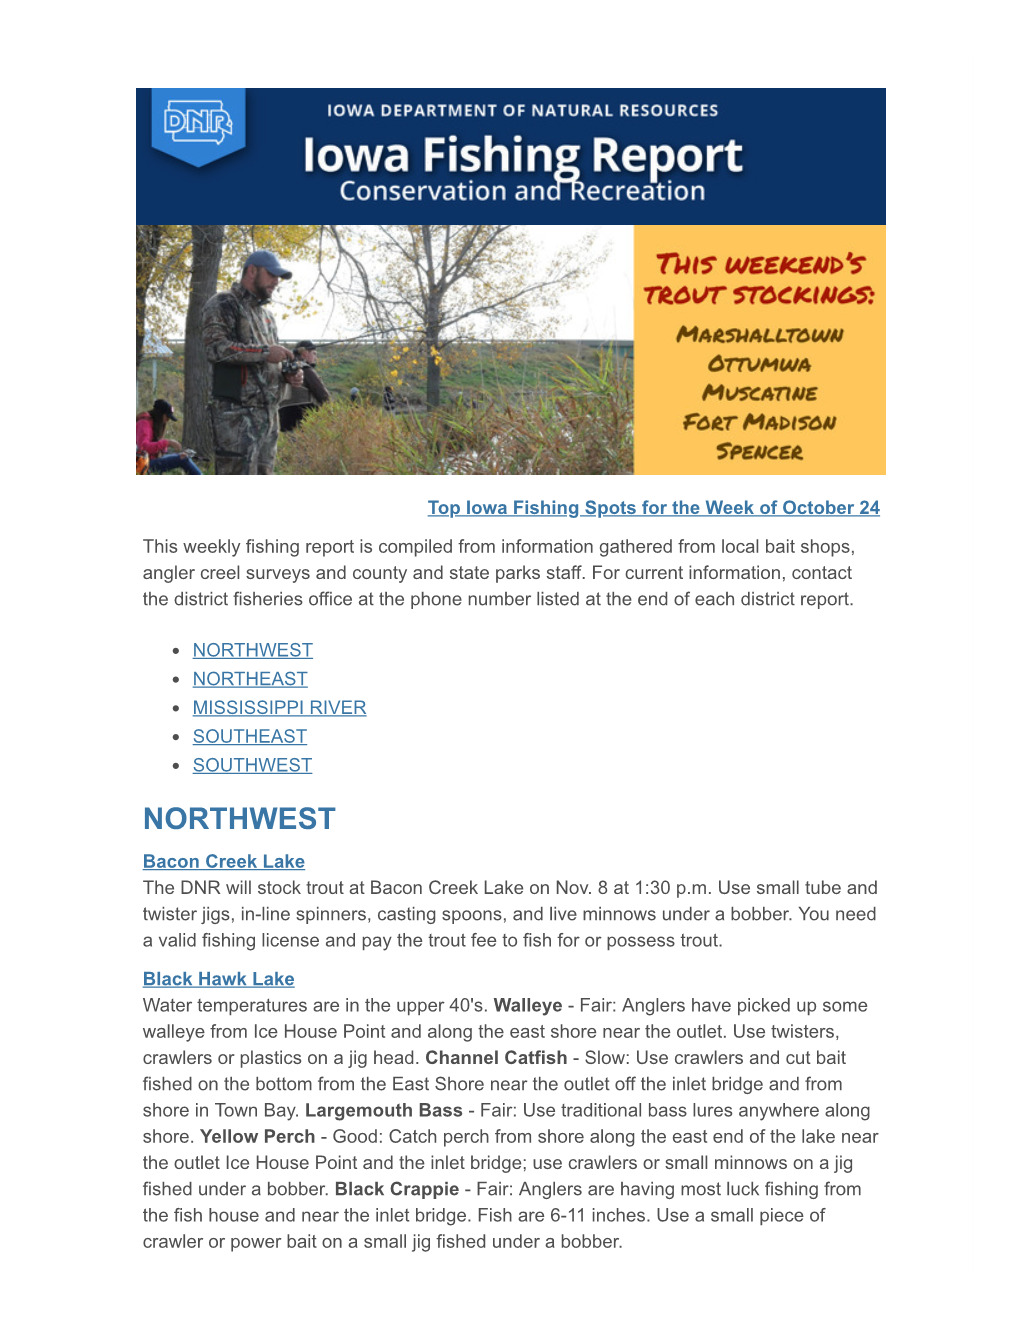 Oct. 24 Iowa Fishing Report.Pdf